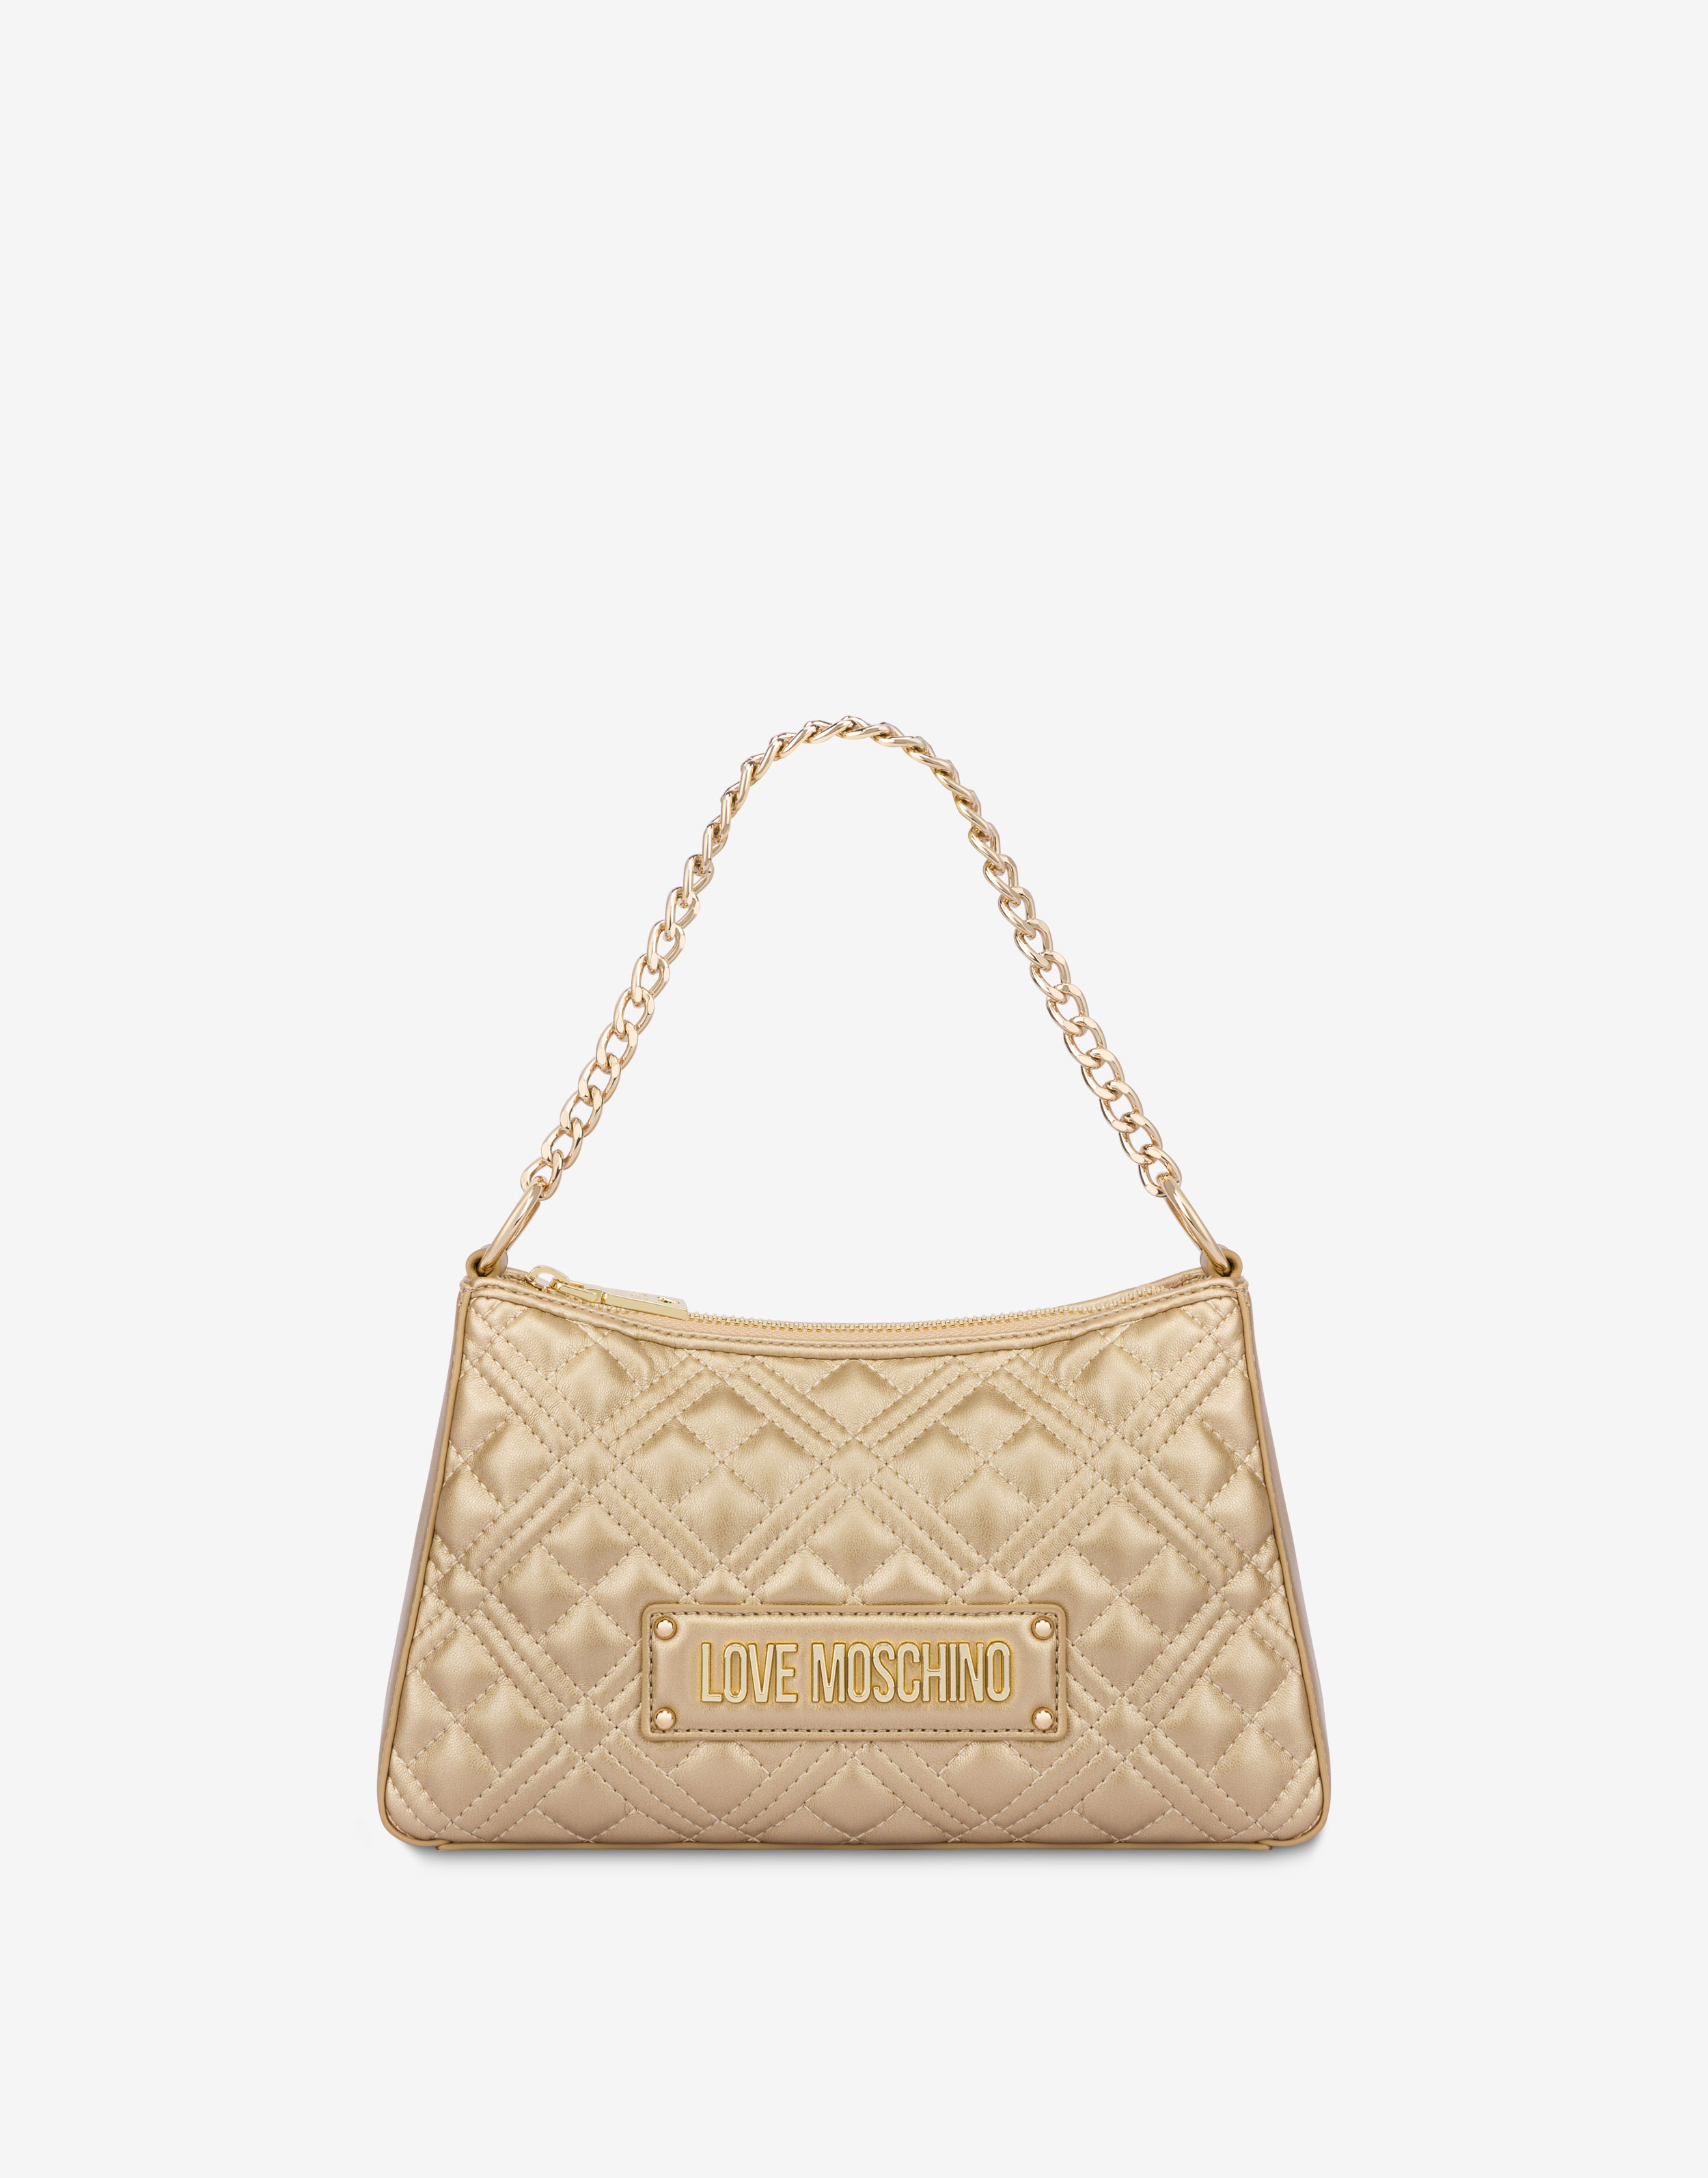 Shop Bag Gold Chain online